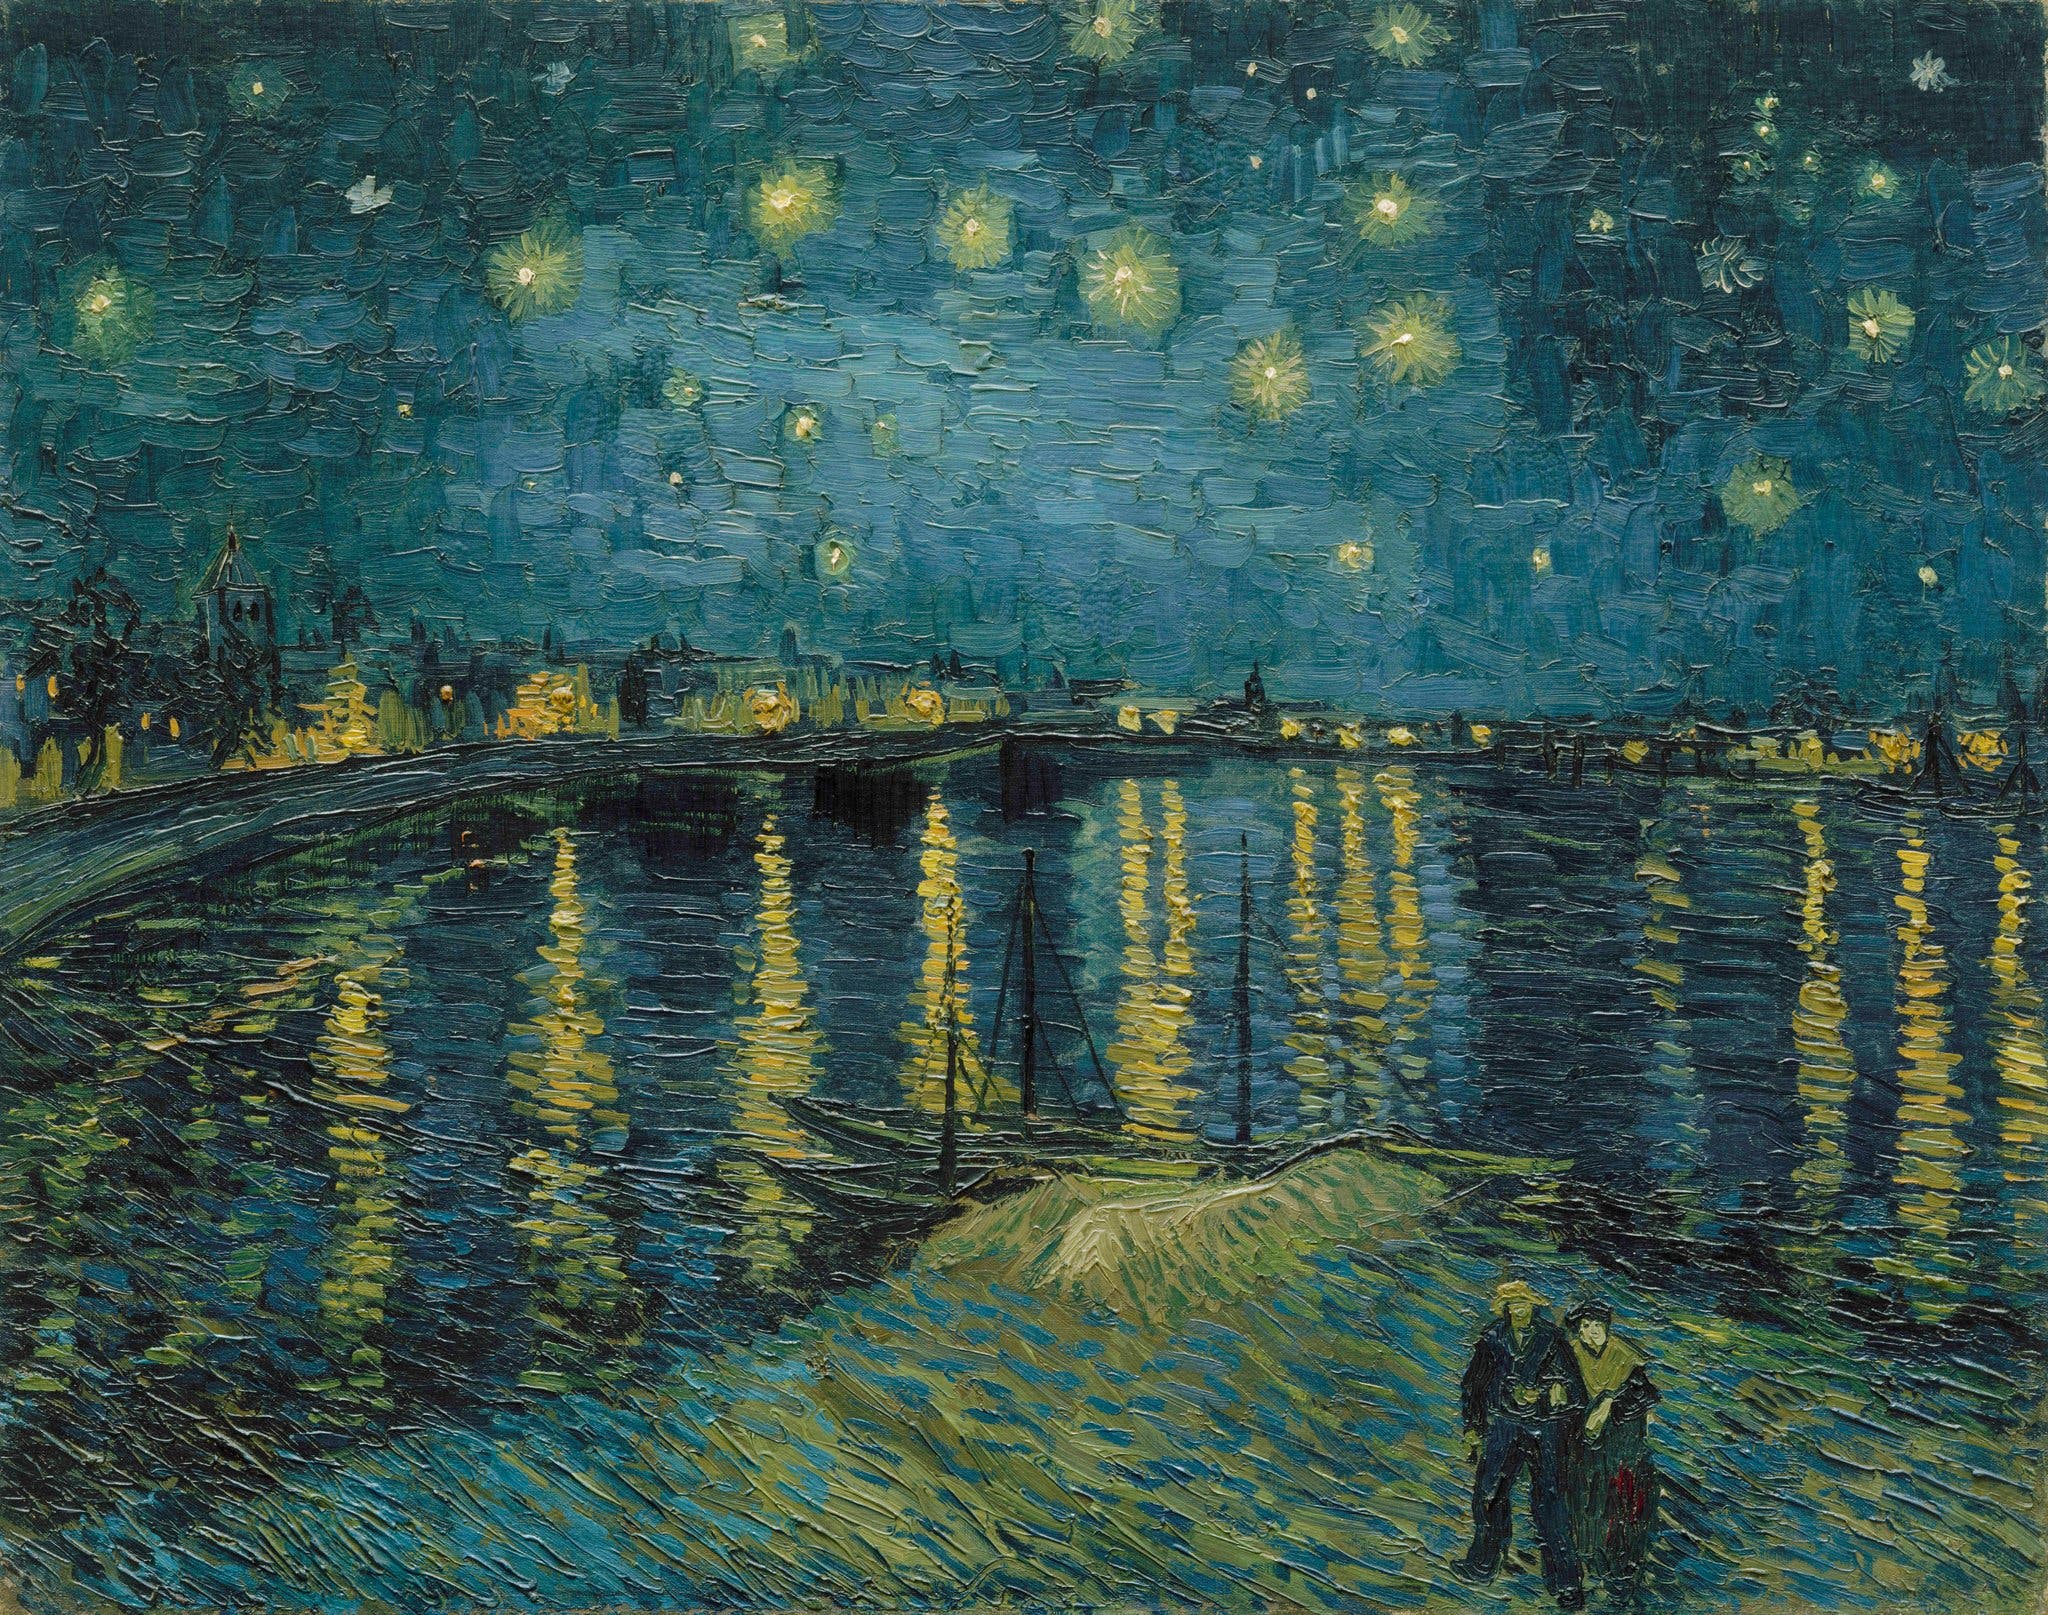 Original Style Image: Starry Night (p.c. Van Gogh).